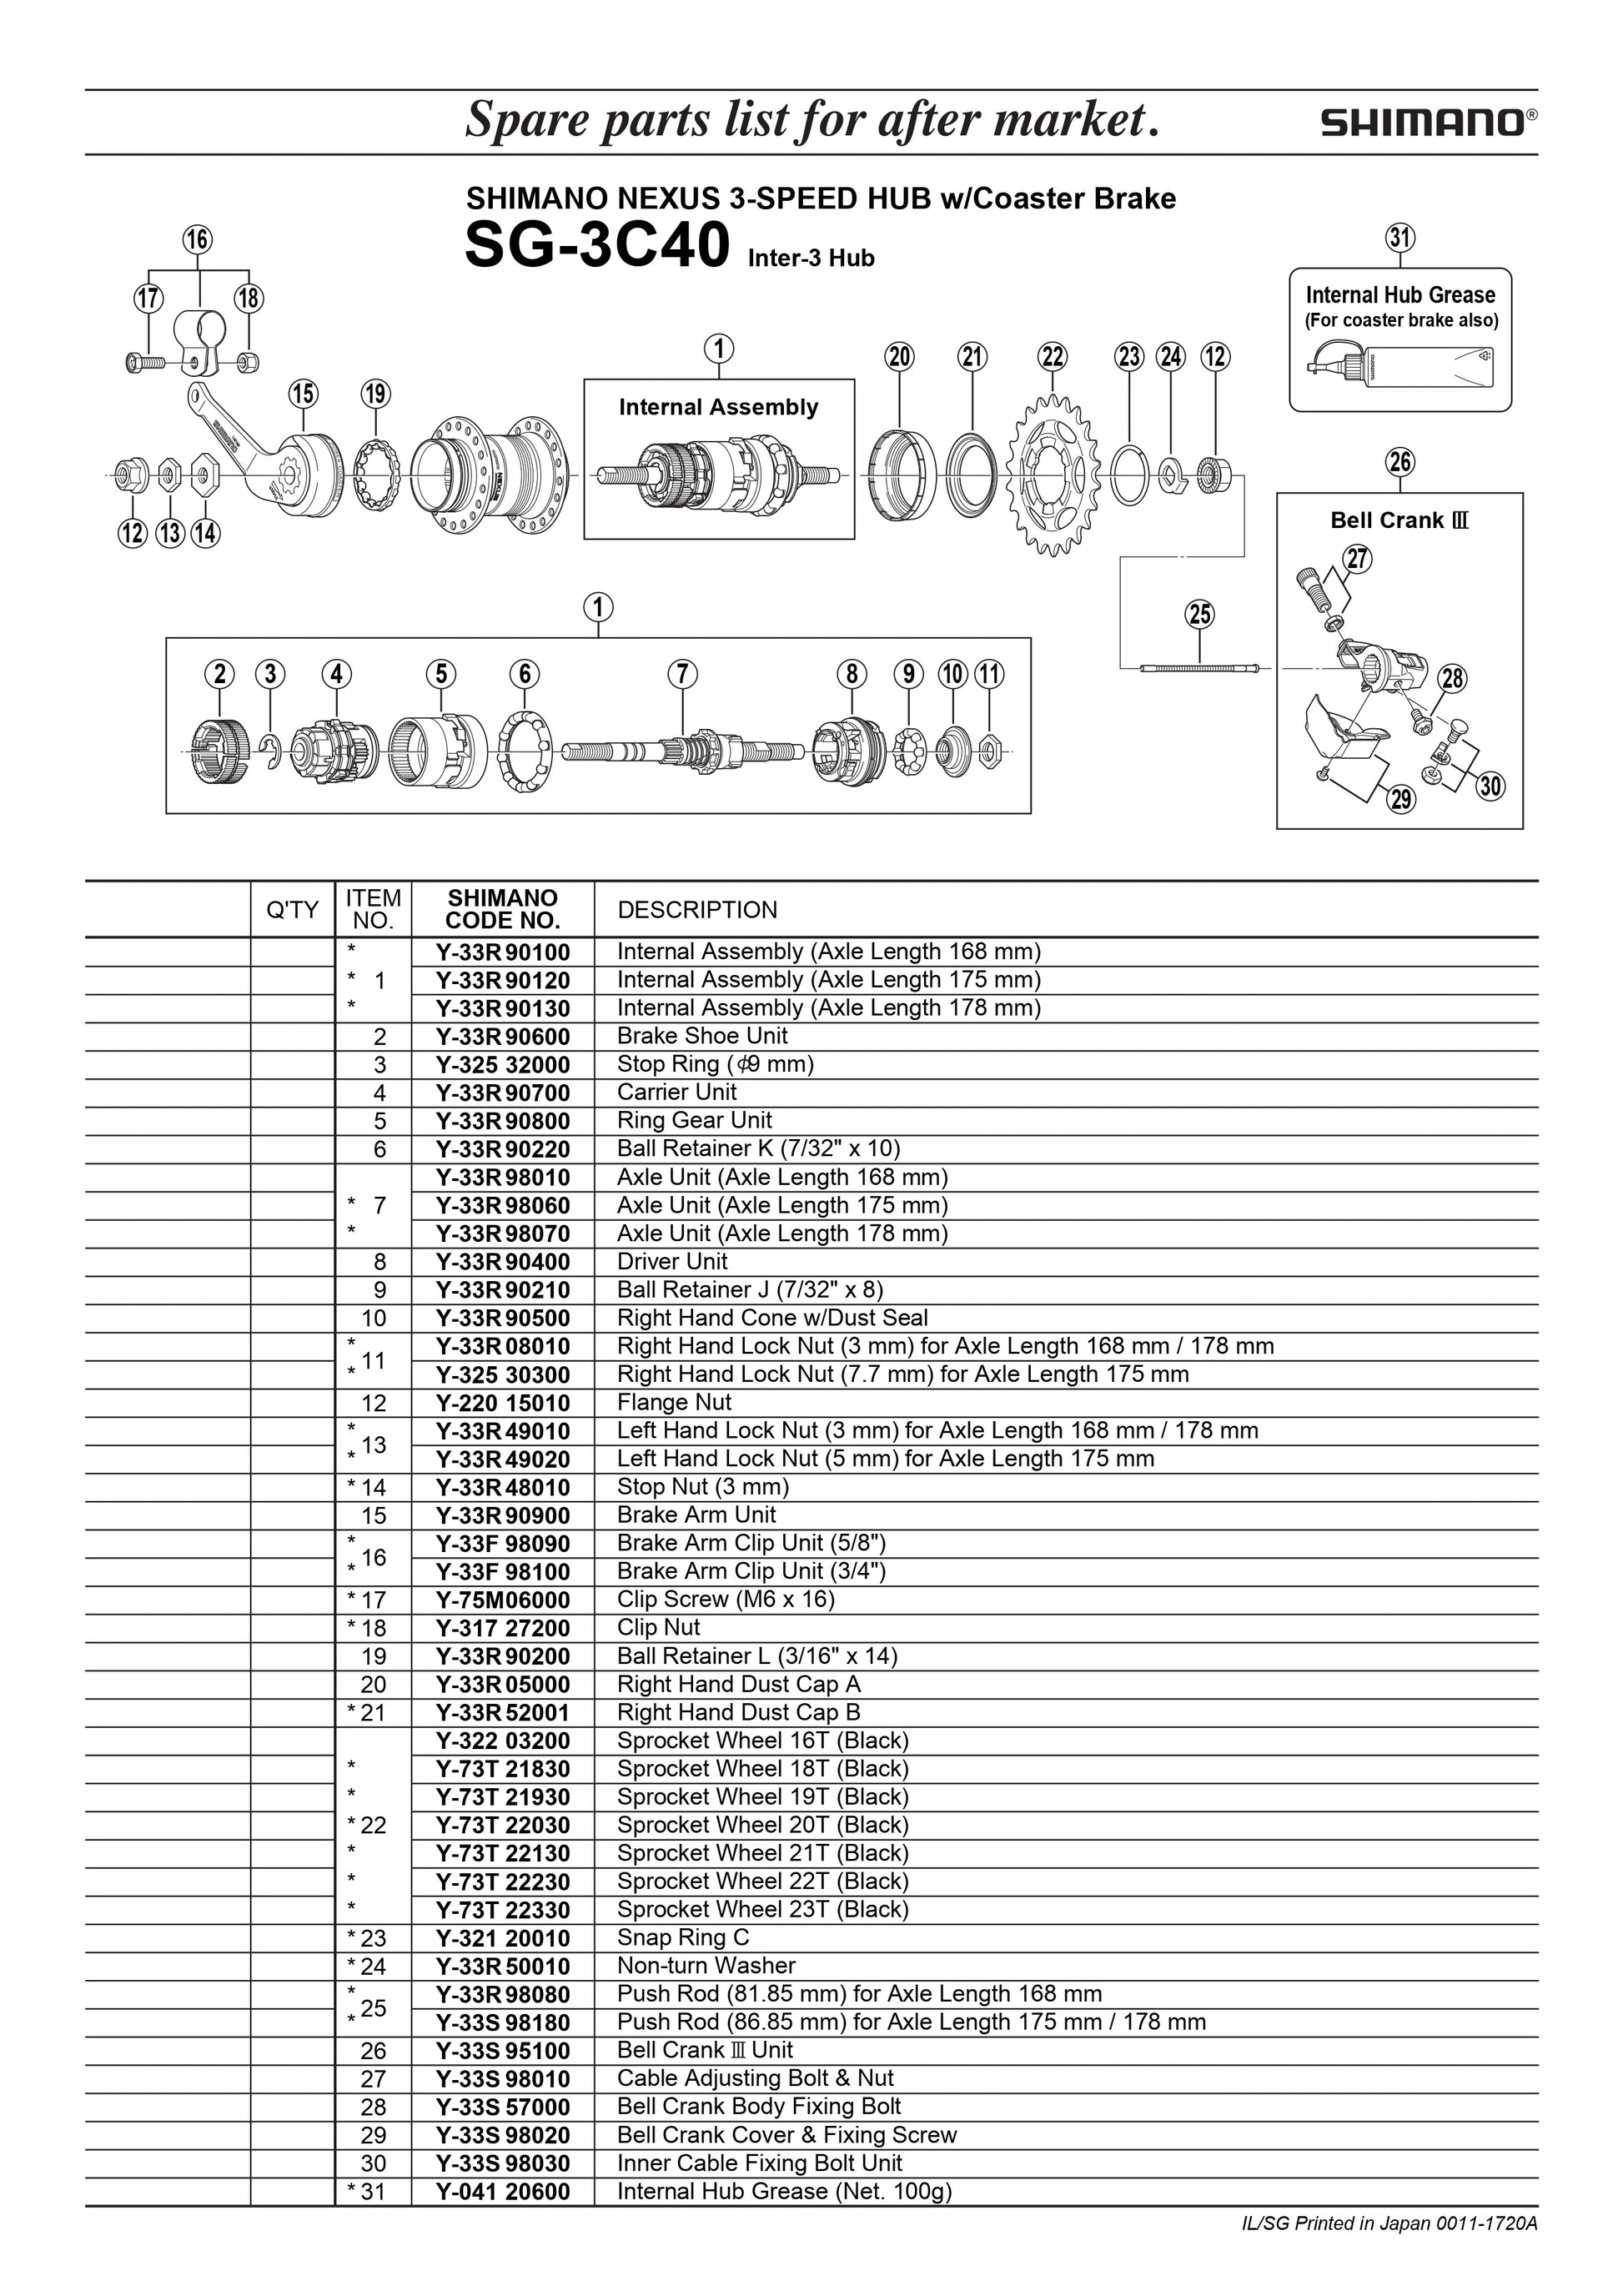 SHIMANO Nexus SG-3C40 Hub 3-Speed Coaster Brake Hub Shoe Unit - Y33R90600-Pit Crew Cycles